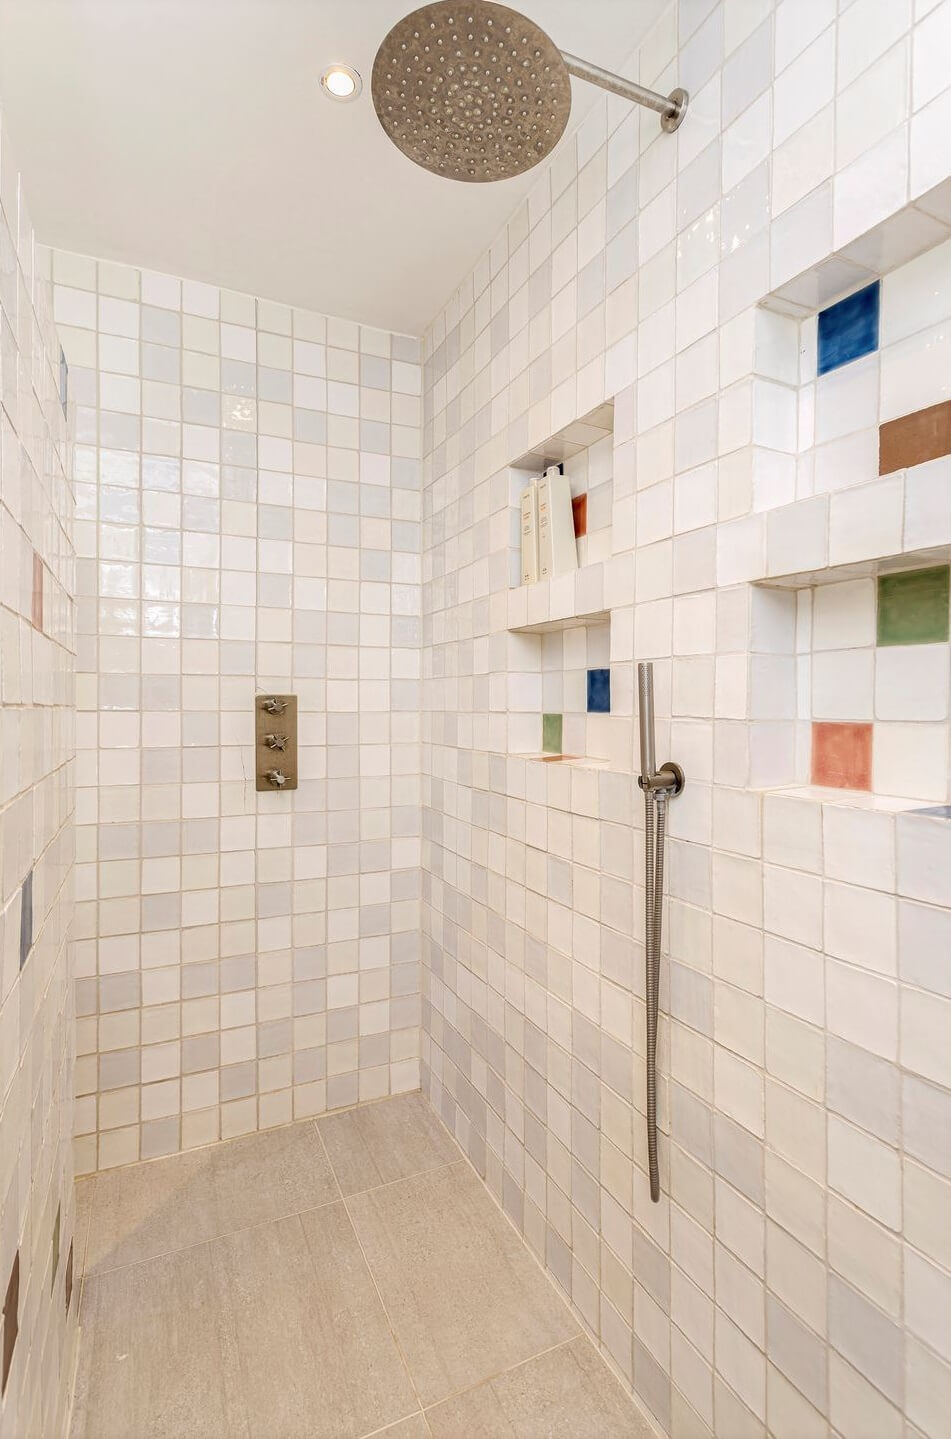 walk-in-shower-zellige-tiles-niches-nordroom